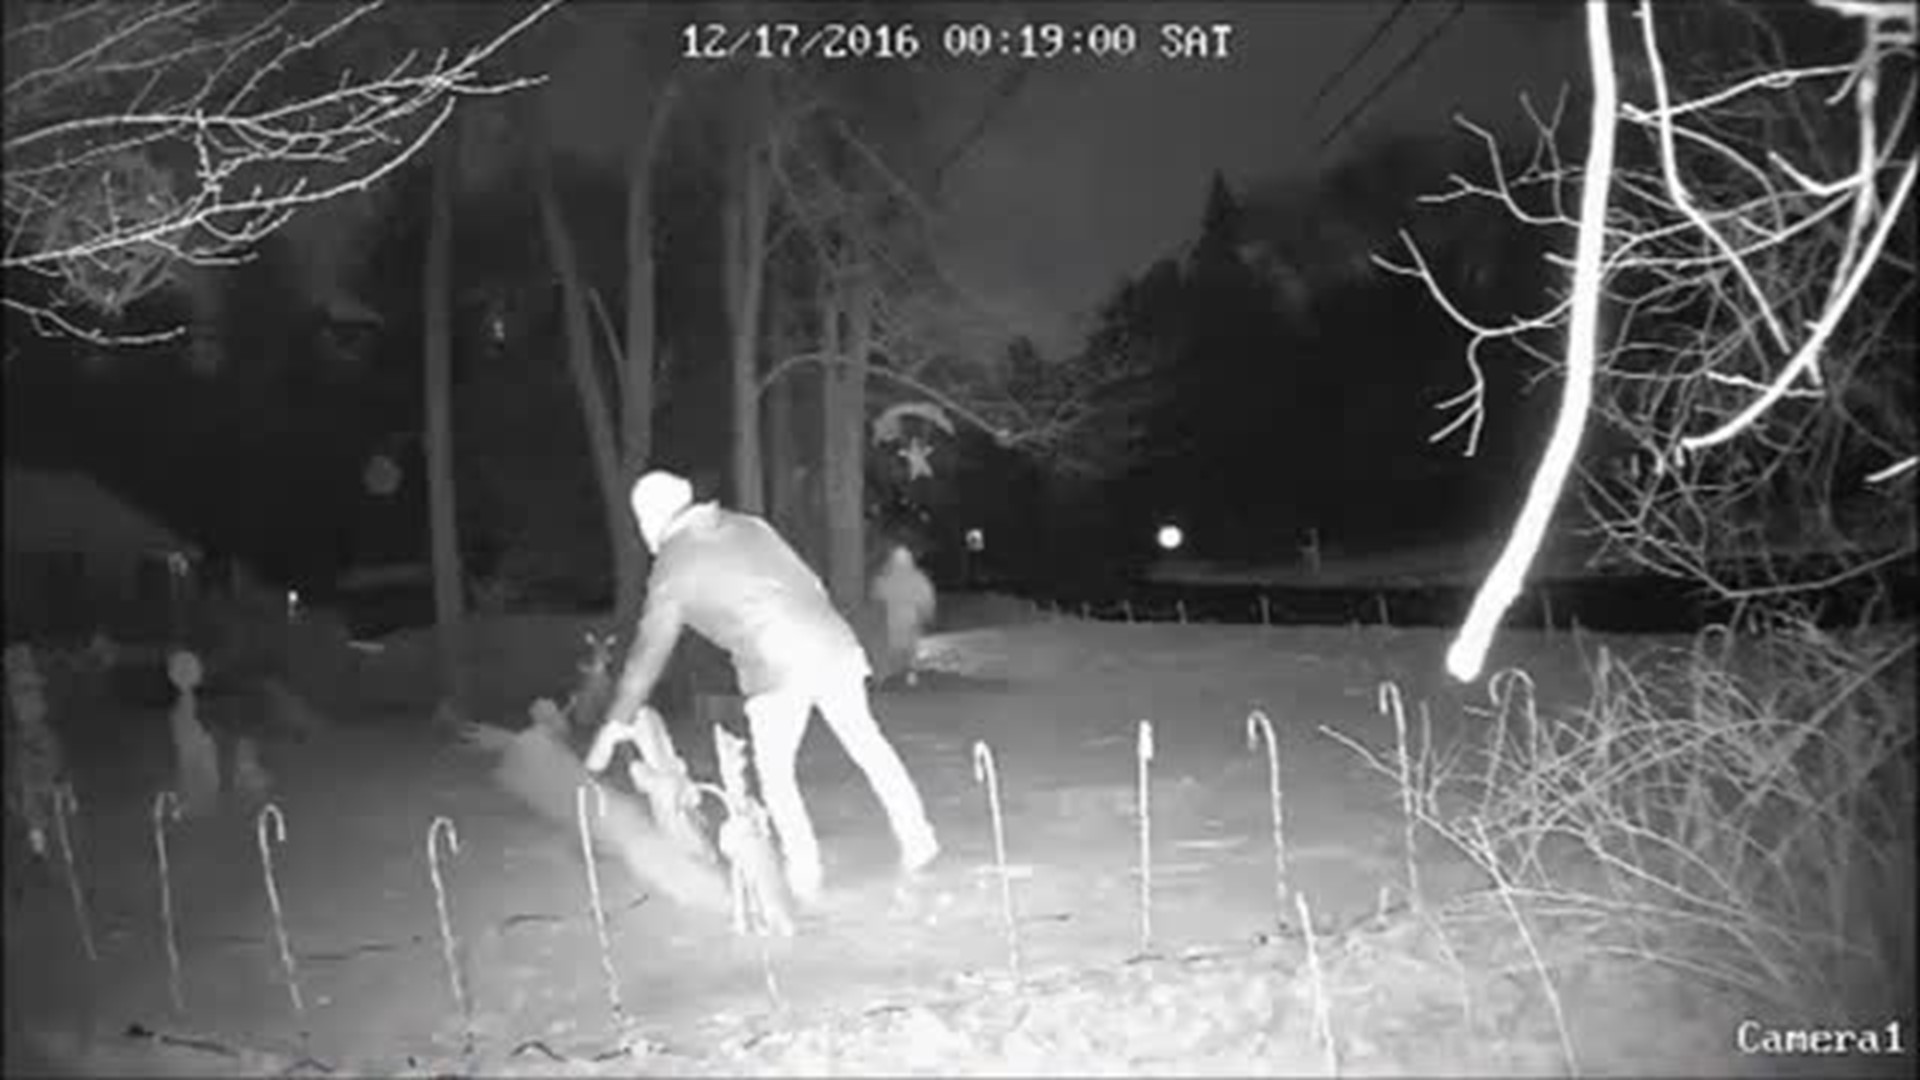 Surveillance video: Simsbury family captures vandals destroying Christmas decorations